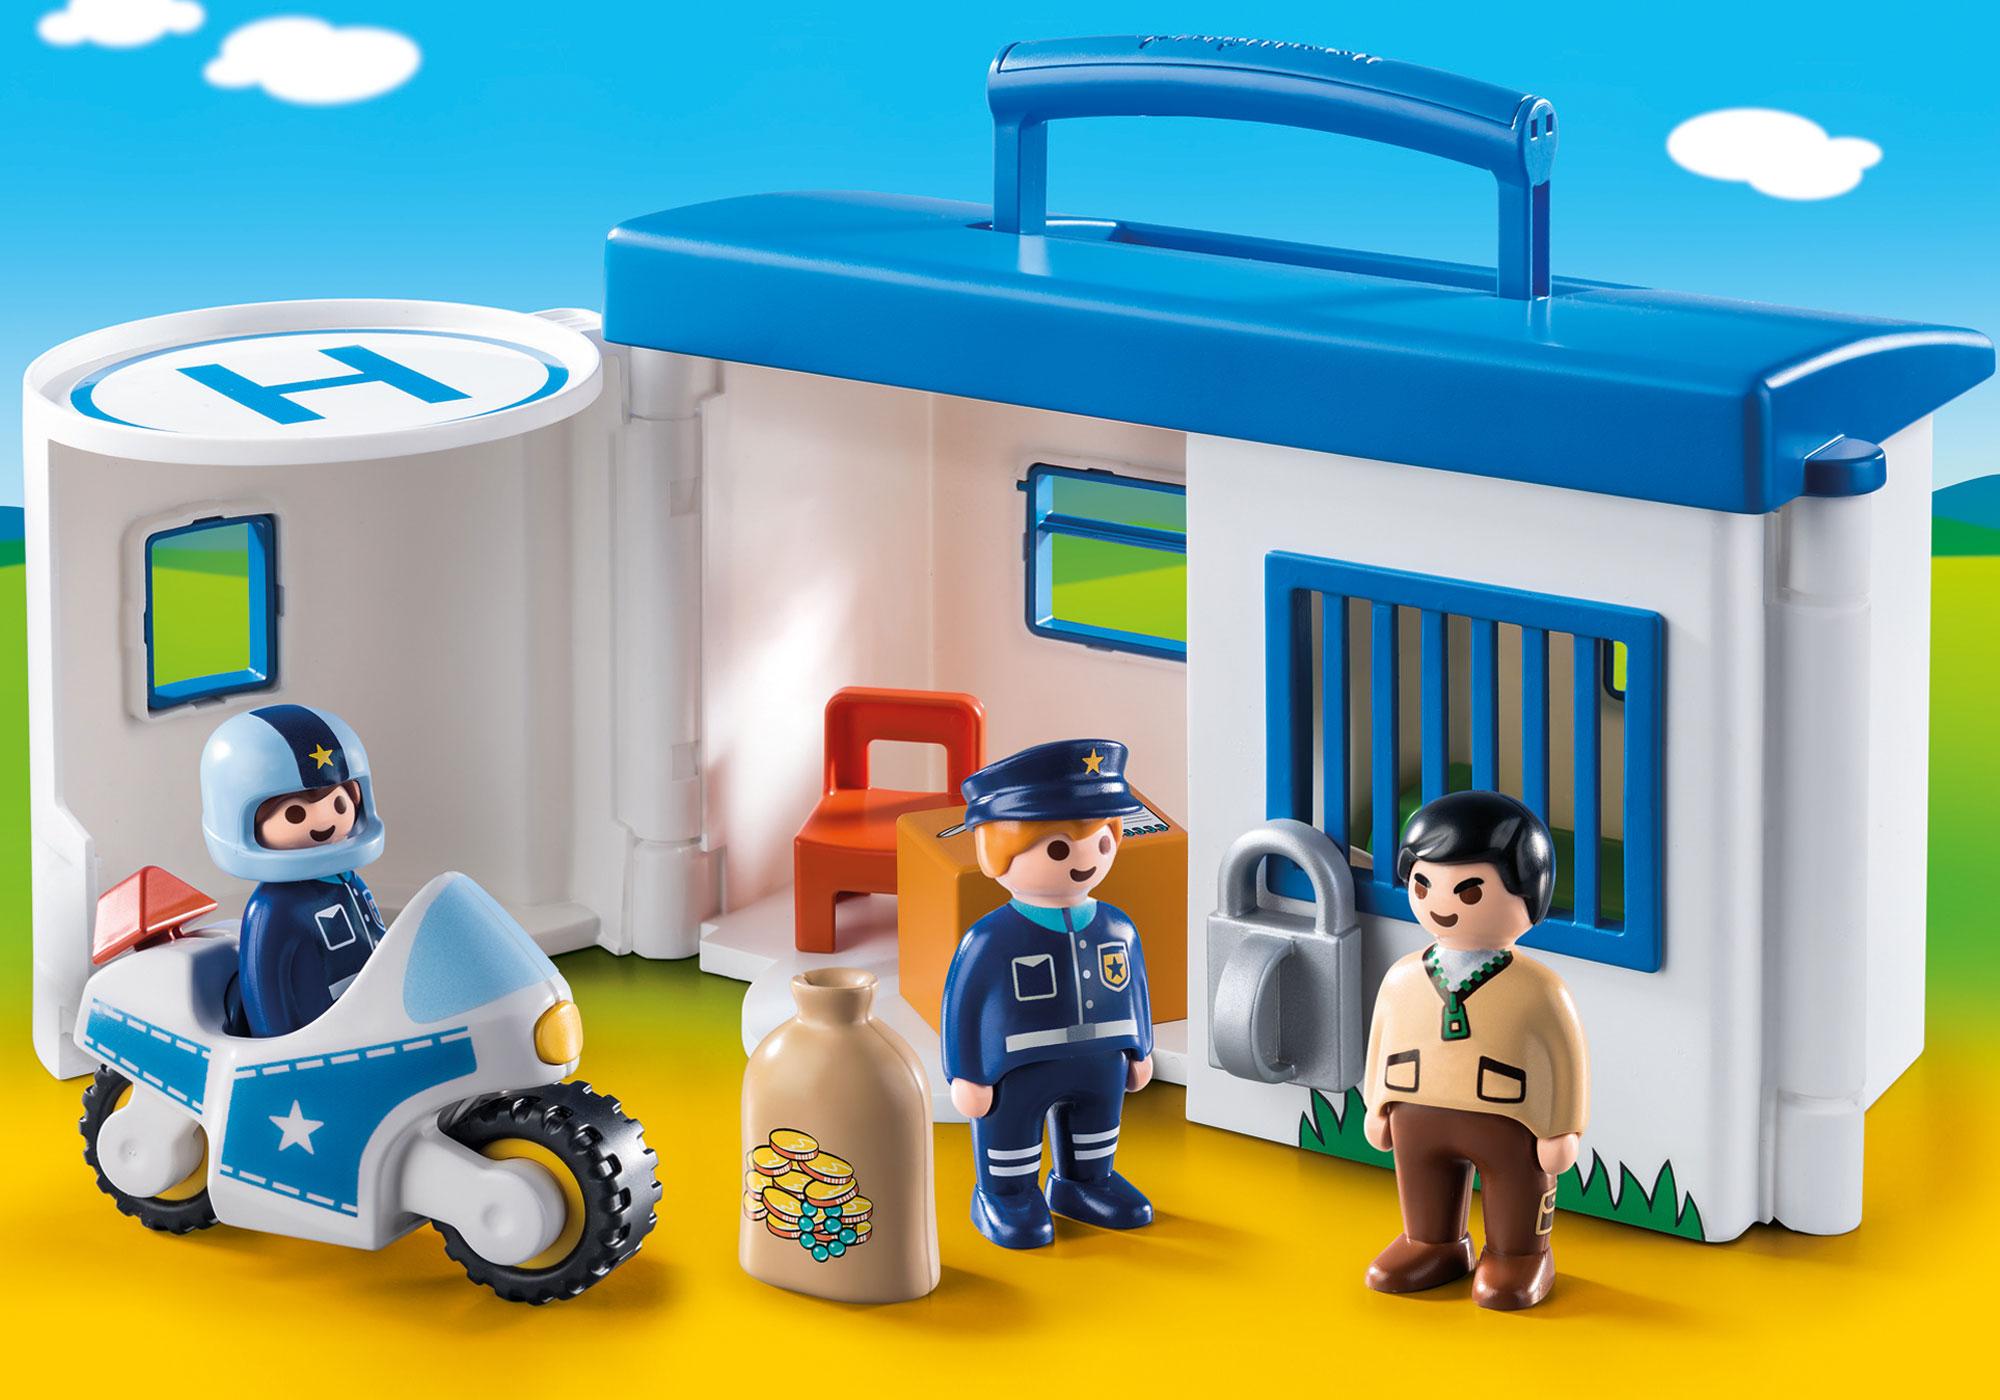 garage police playmobil